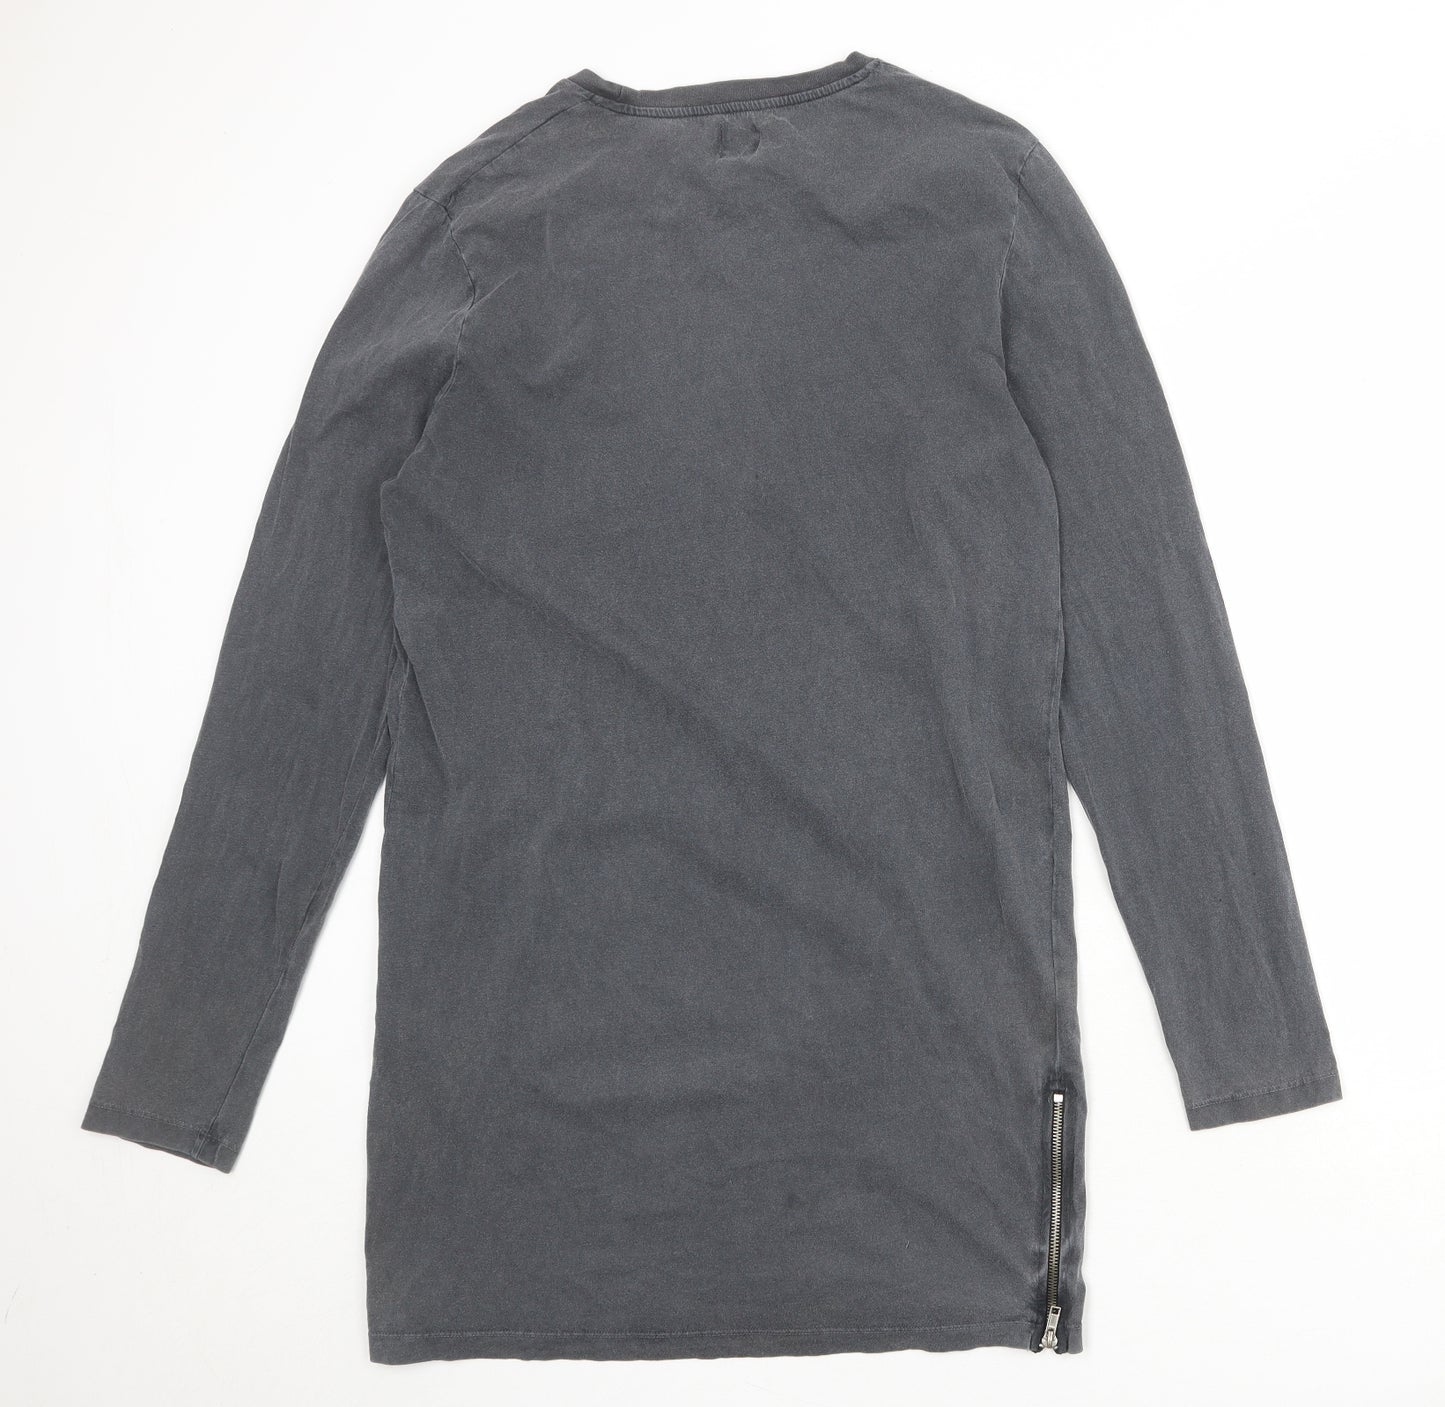 ASOS Womens Grey 100% Cotton T-Shirt Dress Size M Round Neck Zip - Zip detail on sides